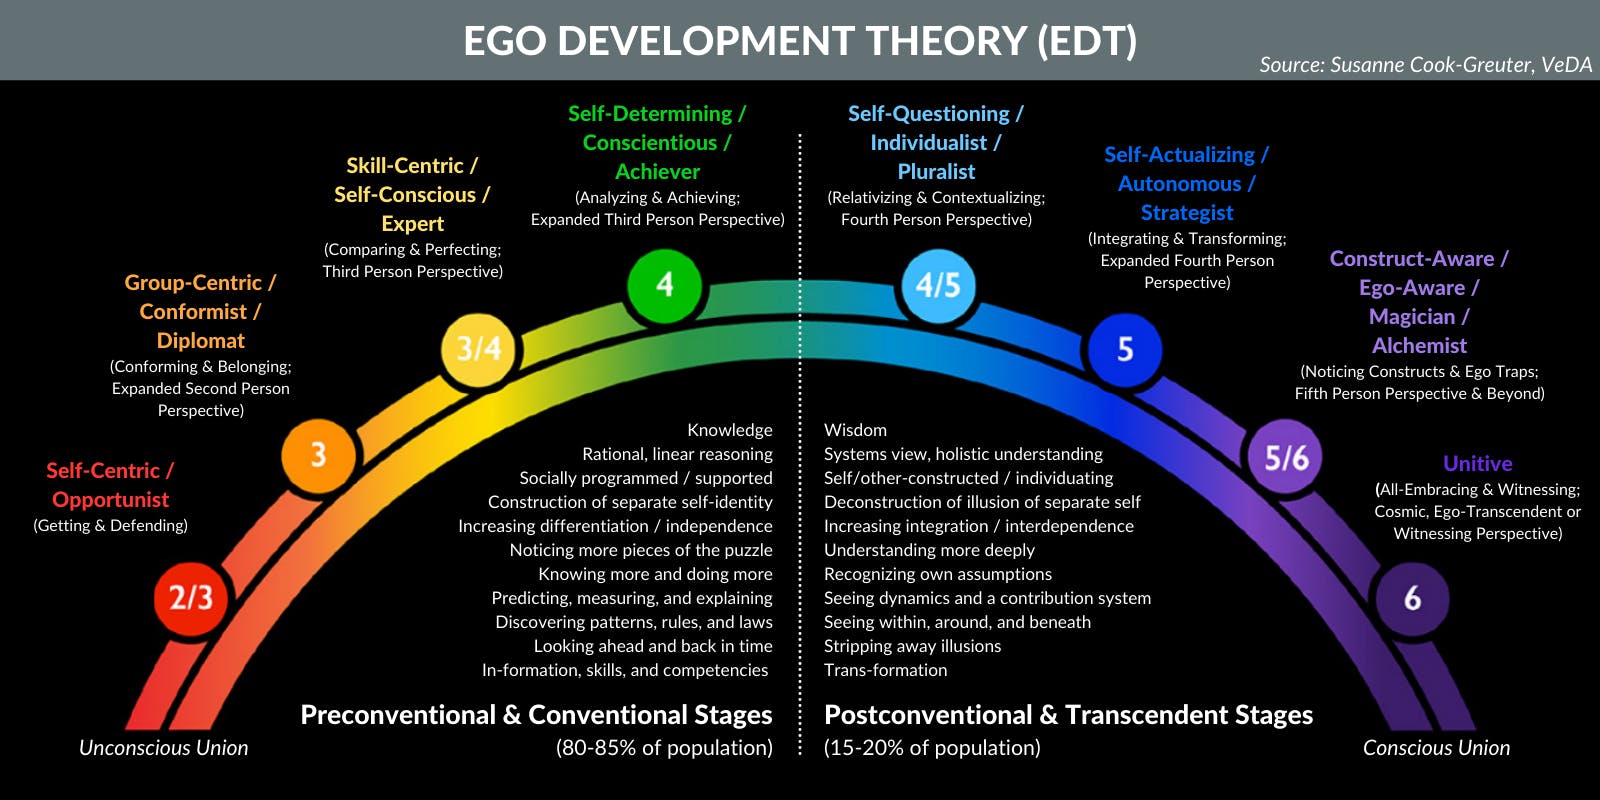 Ego Development Theory in a nutshell